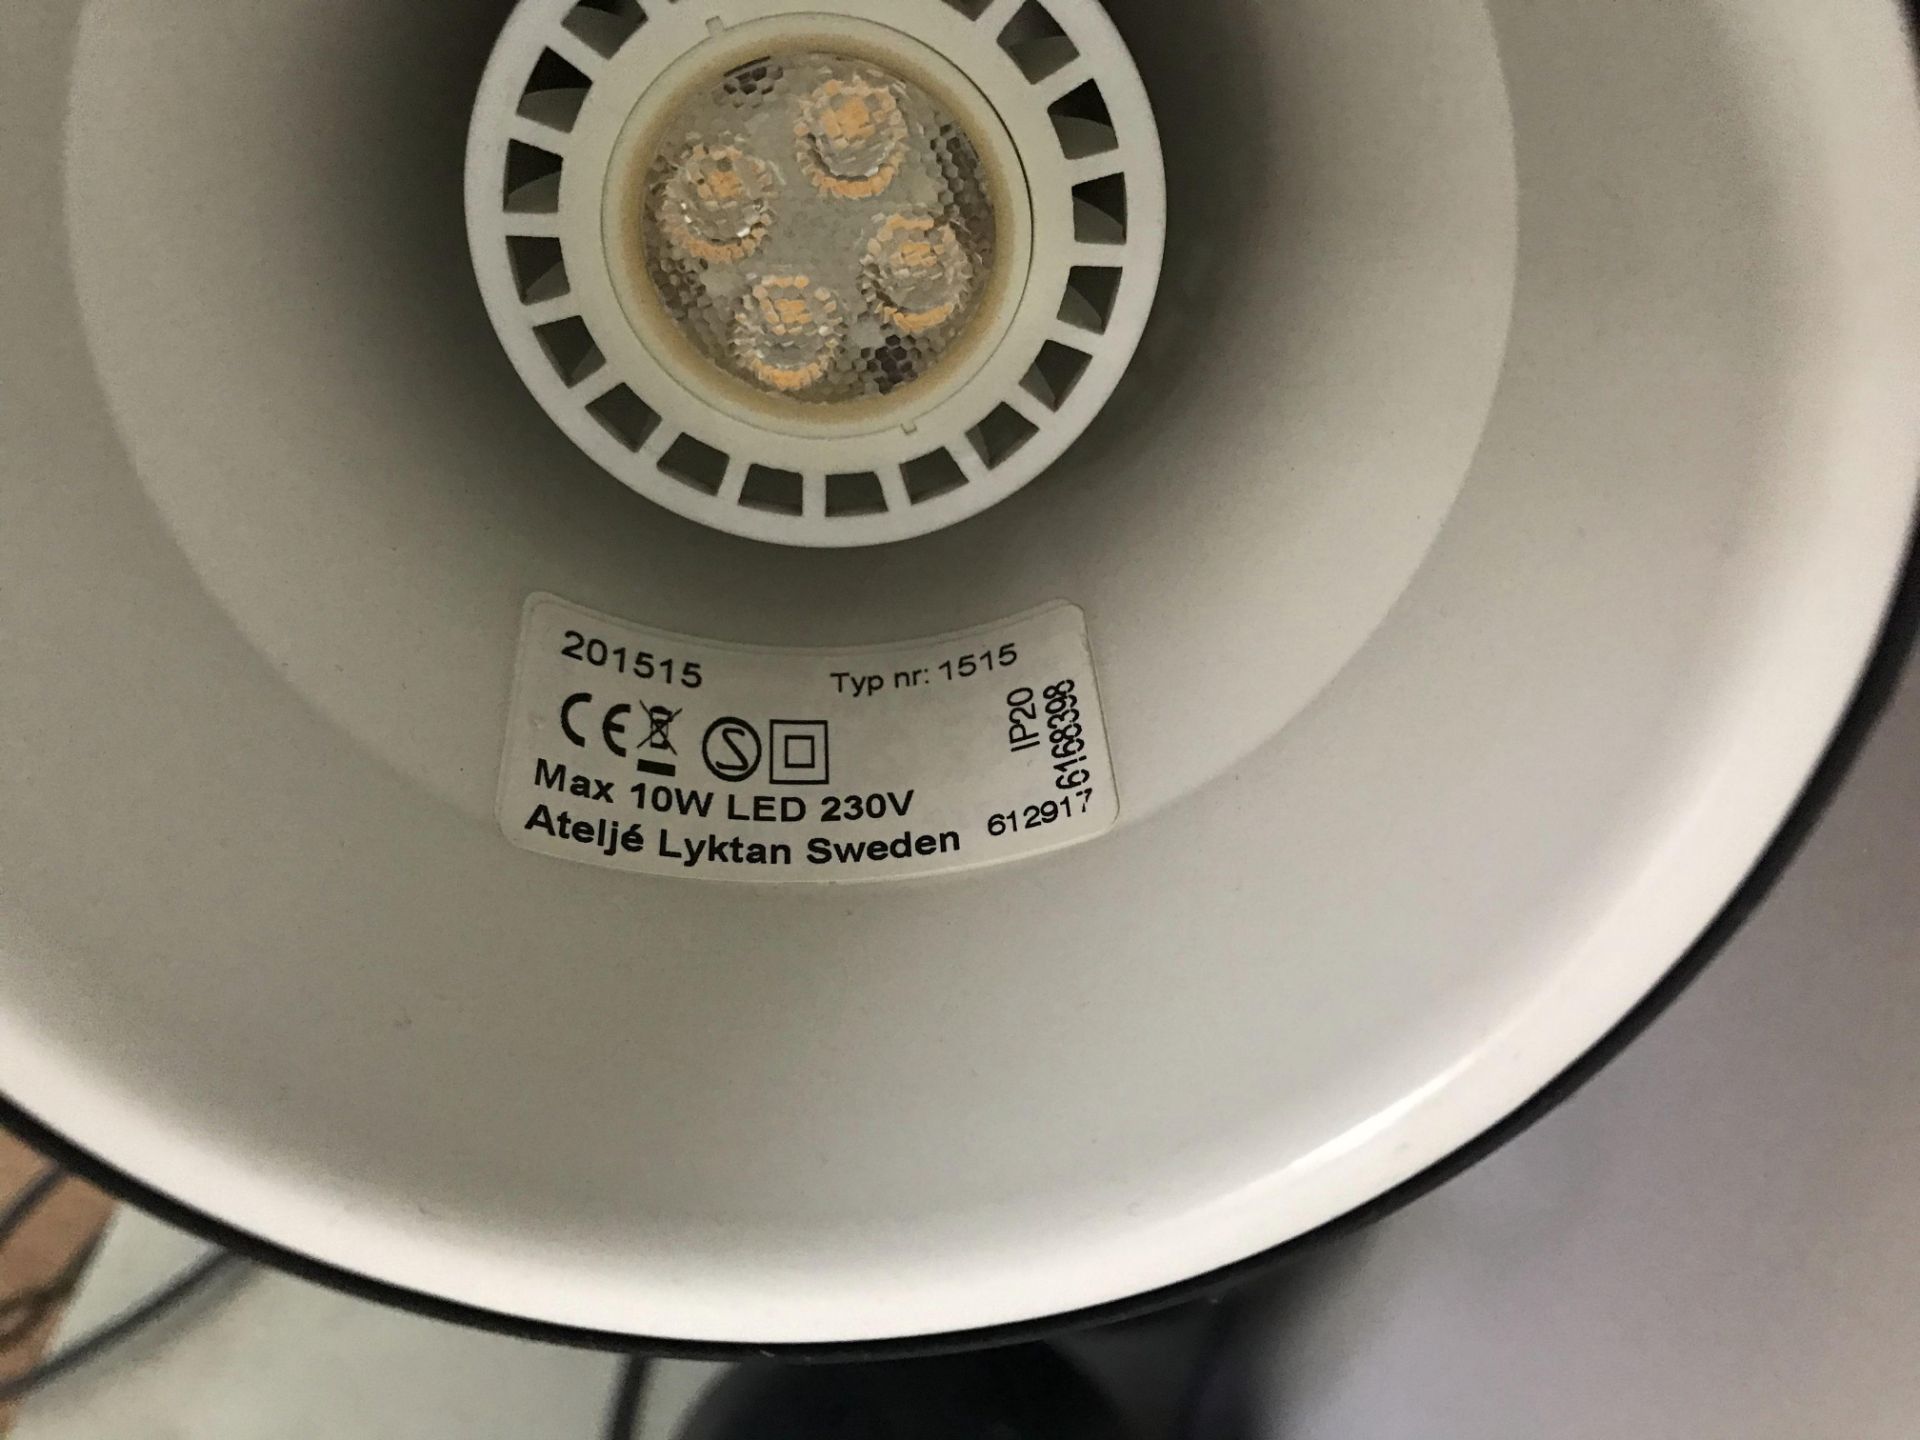 3 x Ateljé Lyktan Designer Ogle Pendant LED Lights With Die Cast Aluminium Casing - Type 201515 - - Image 2 of 2